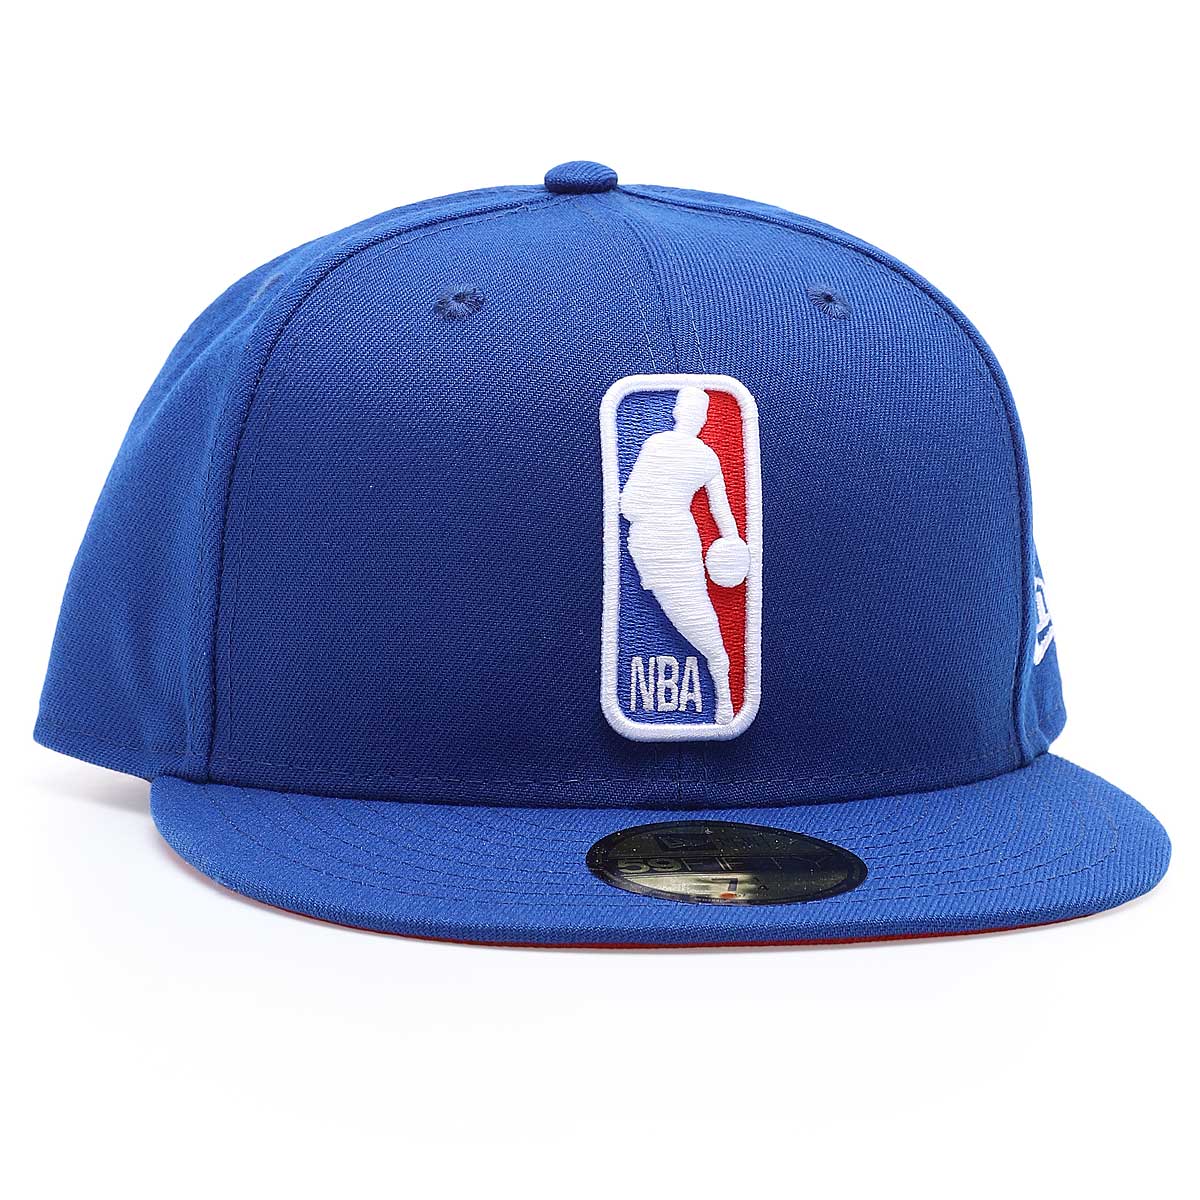 Buy NBA 5950 LOGO CAP for N/A 0.0 on KICKZ.com!